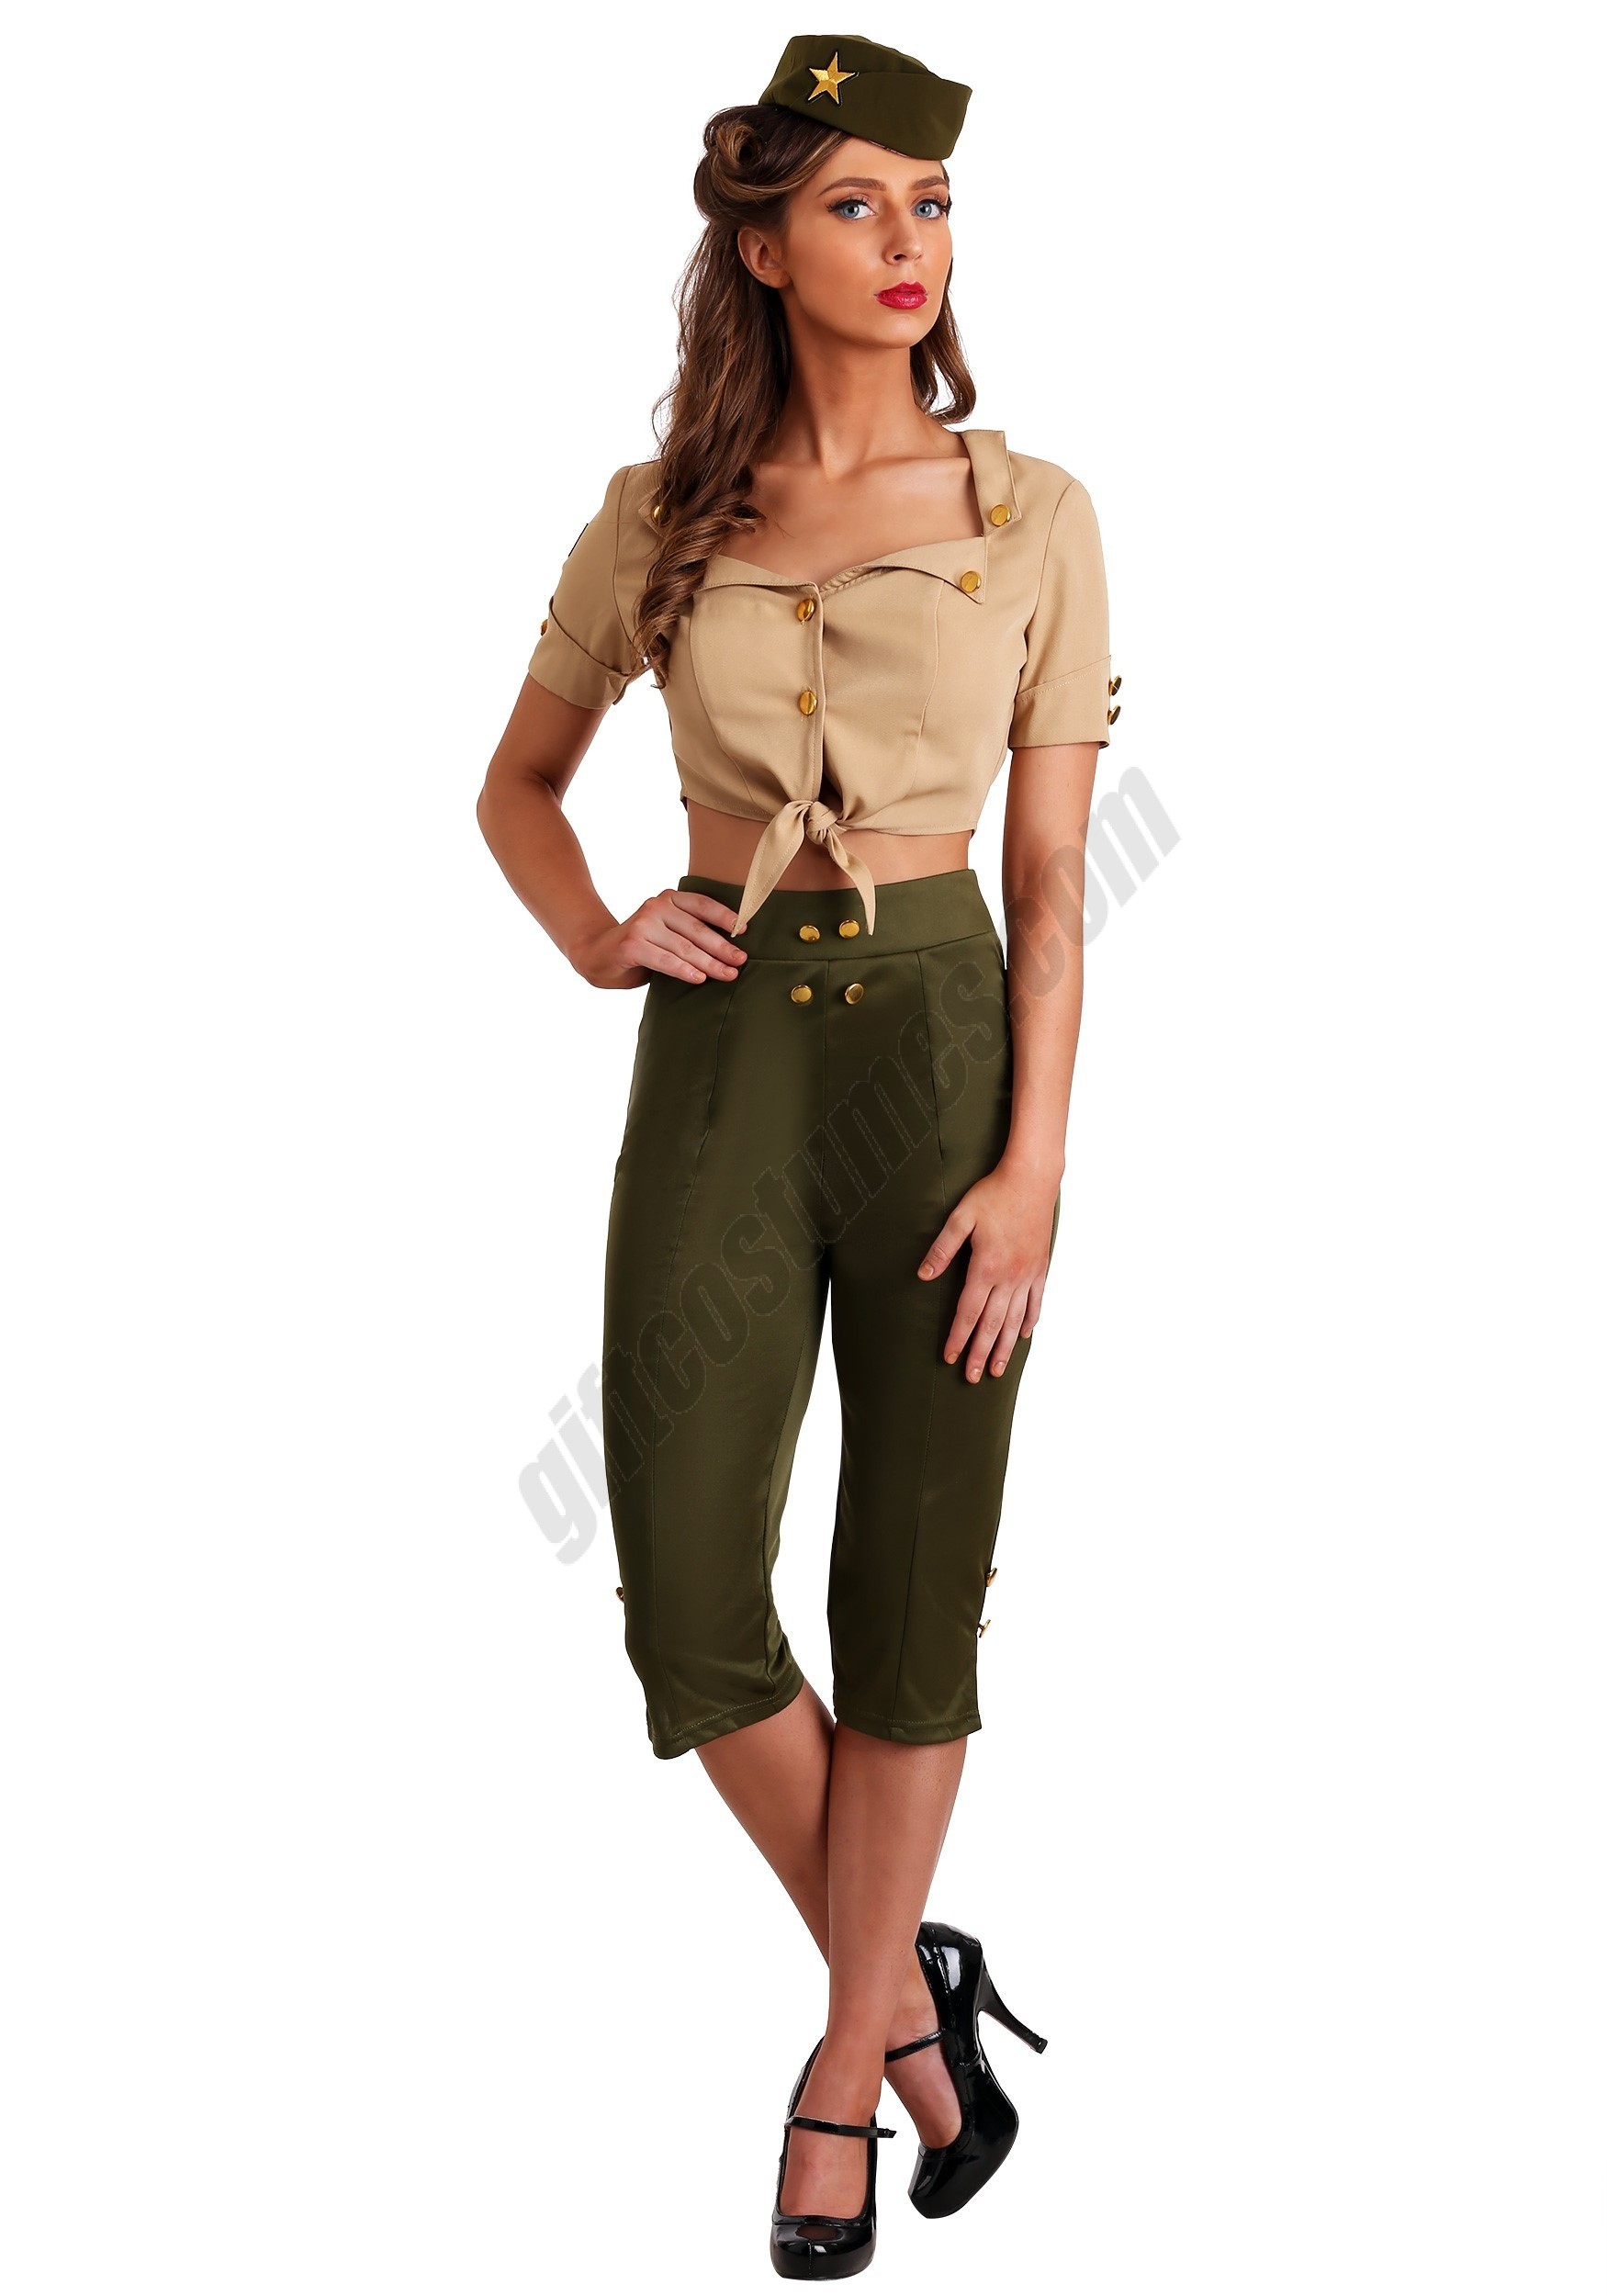 Women's Vintage Pin Up Soldier Costume - Women's Vintage Pin Up Soldier Costume